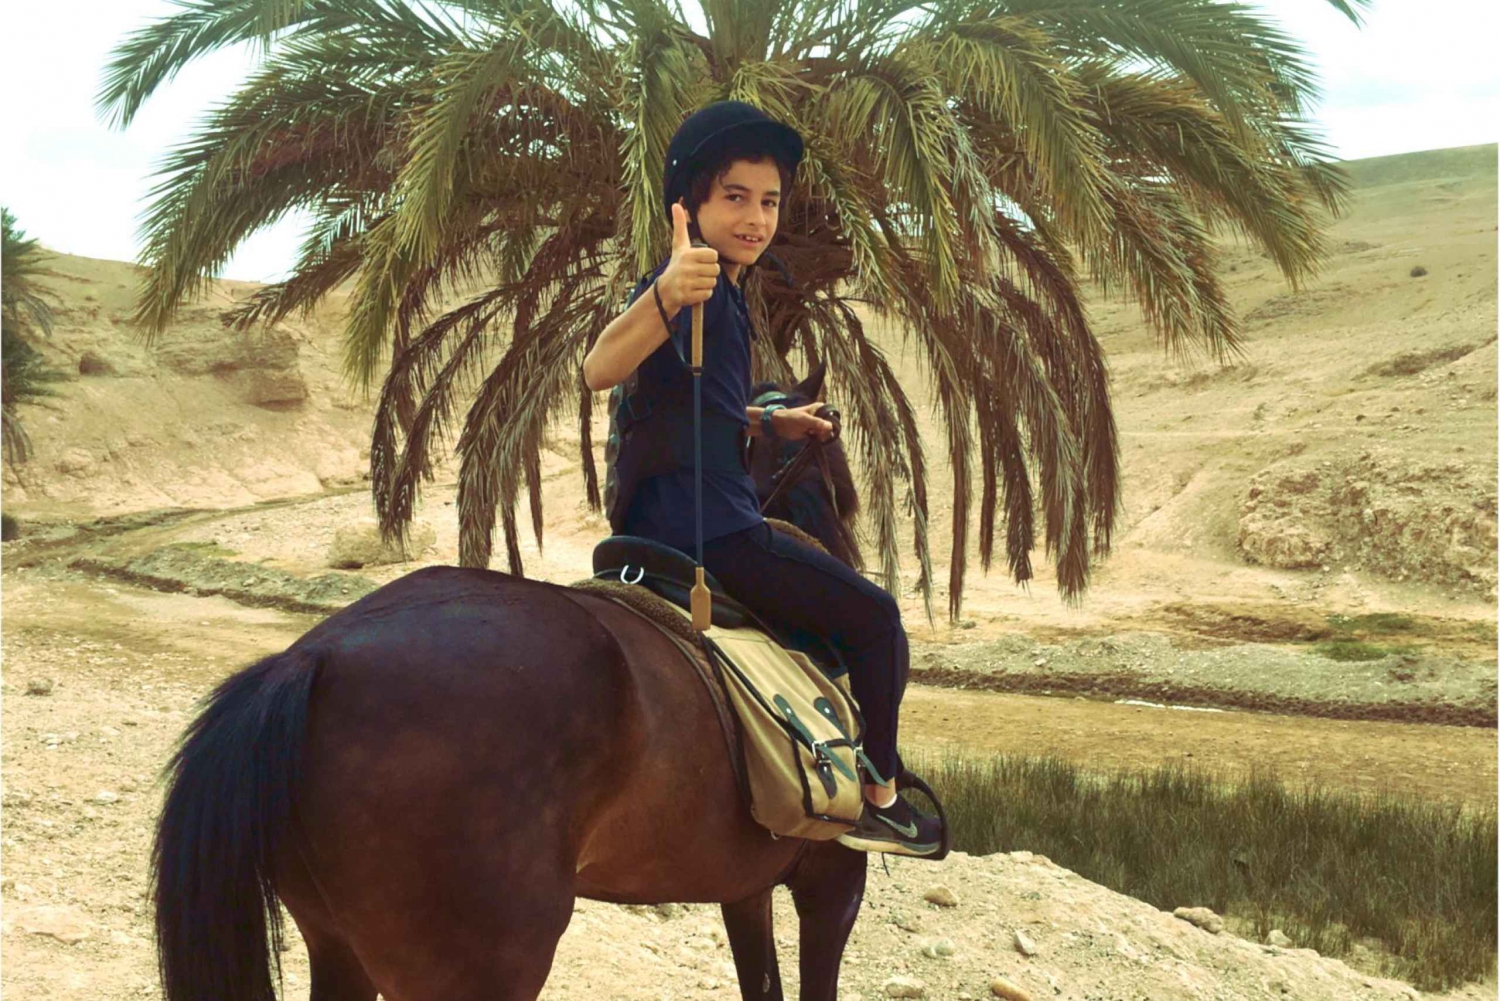 Marrakech: Palm Grove Horseback Riding Tour